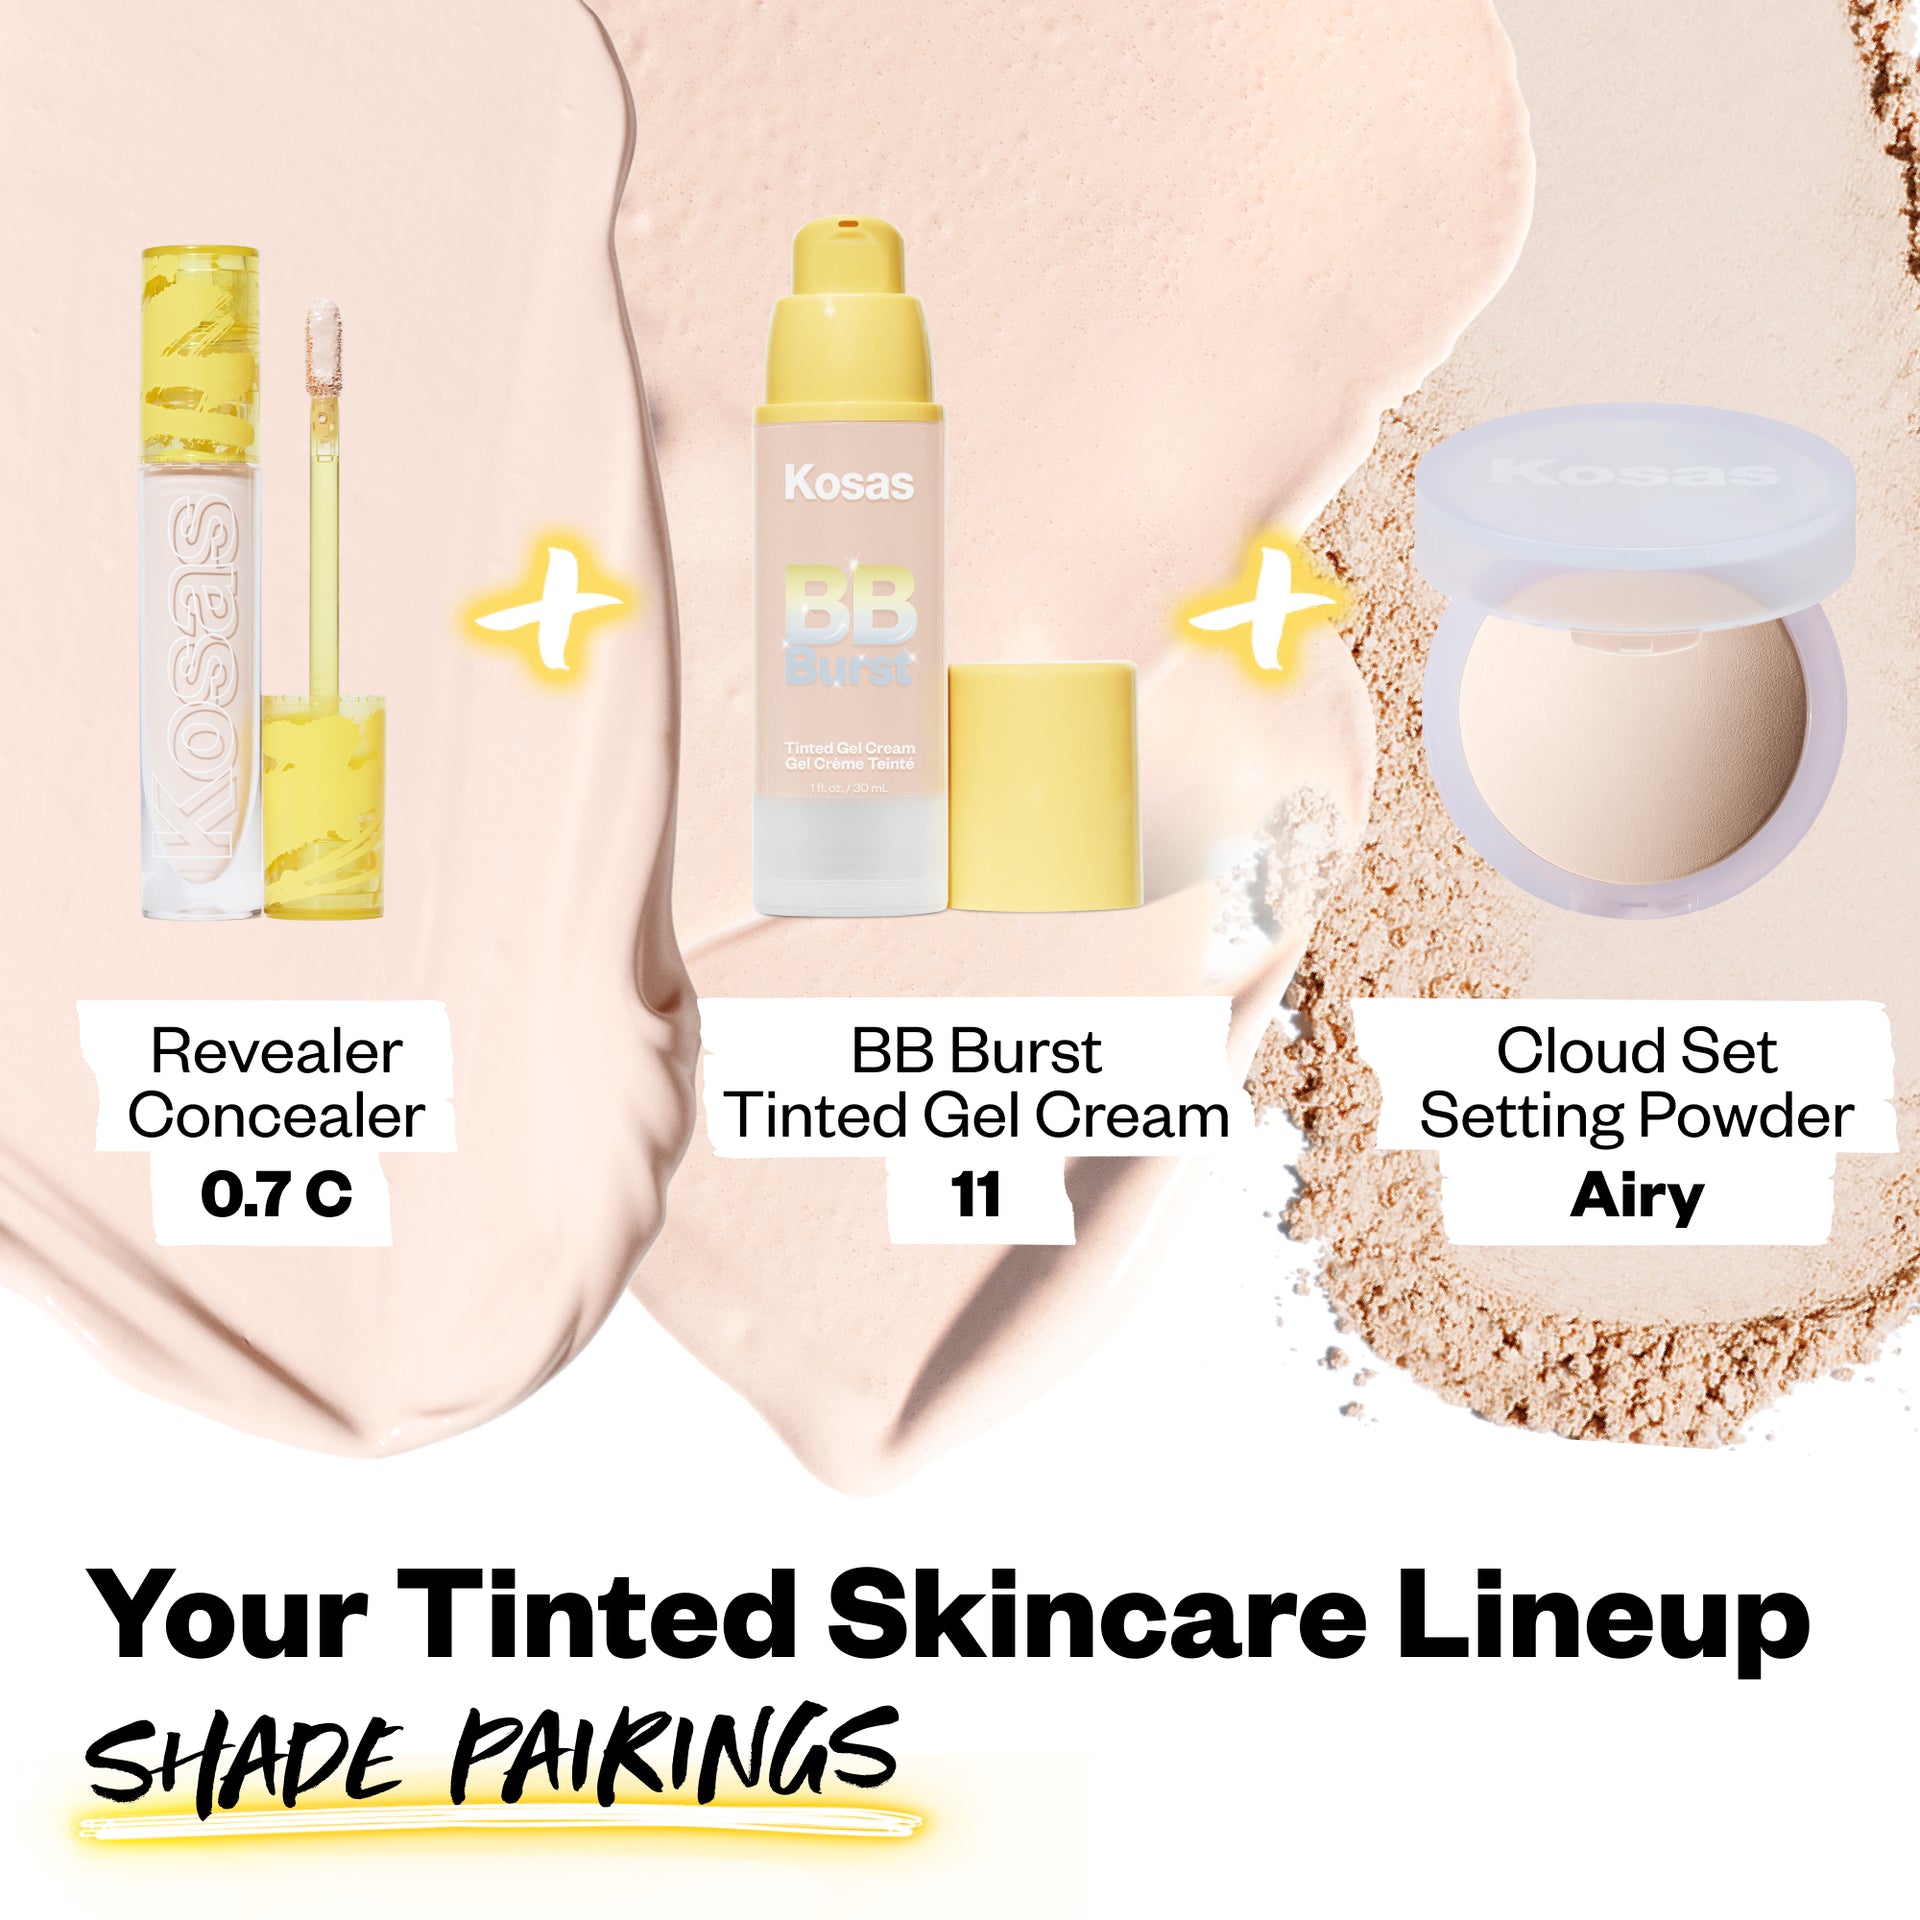 Your Tinted Skincare Lineup Shade Pairings (Revealer Concealer 0.7C, BB Burst Tinted Gel Cream 11, Cloud Set Setting Powder Airy)